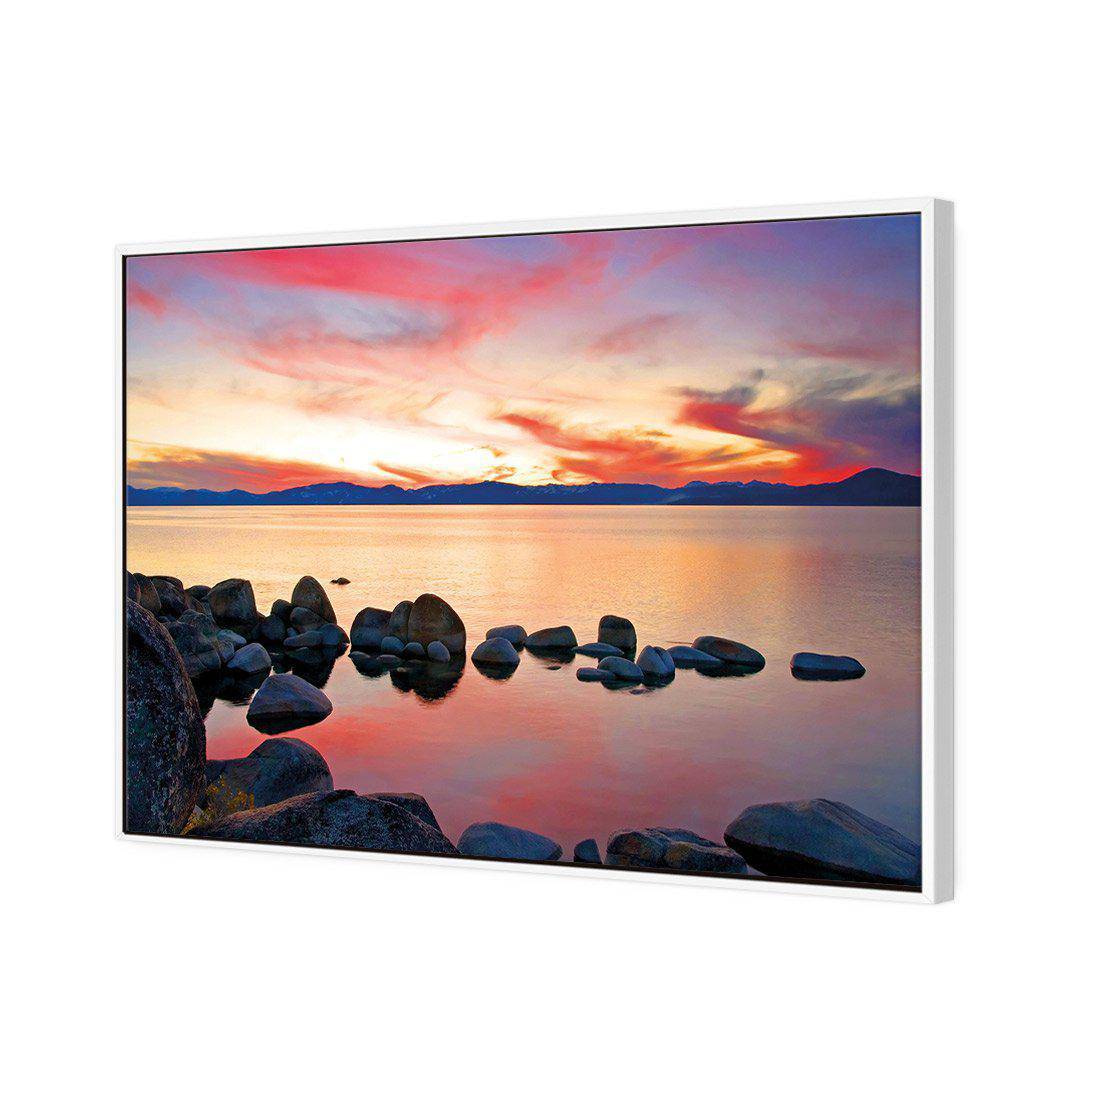 Sunset Calm Waters Canvas Art-Canvas-Wall Art Designs-45x30cm-Canvas - White Frame-Wall Art Designs